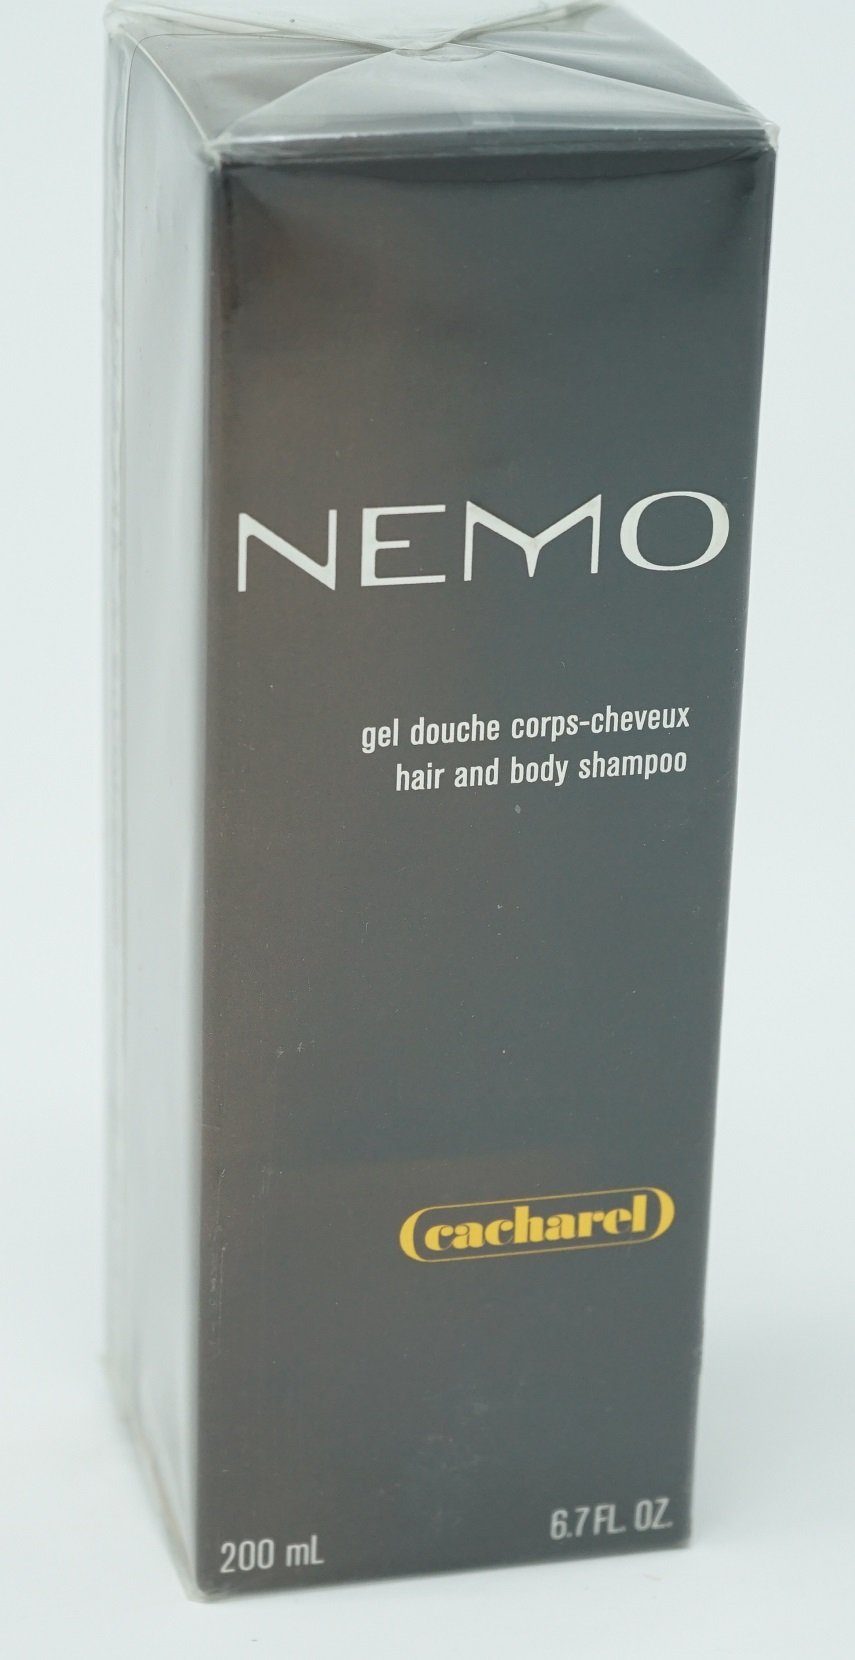 Body NEMO CACHAREL Haarshampoo 200 Shampoo ml Cacharel Hair and